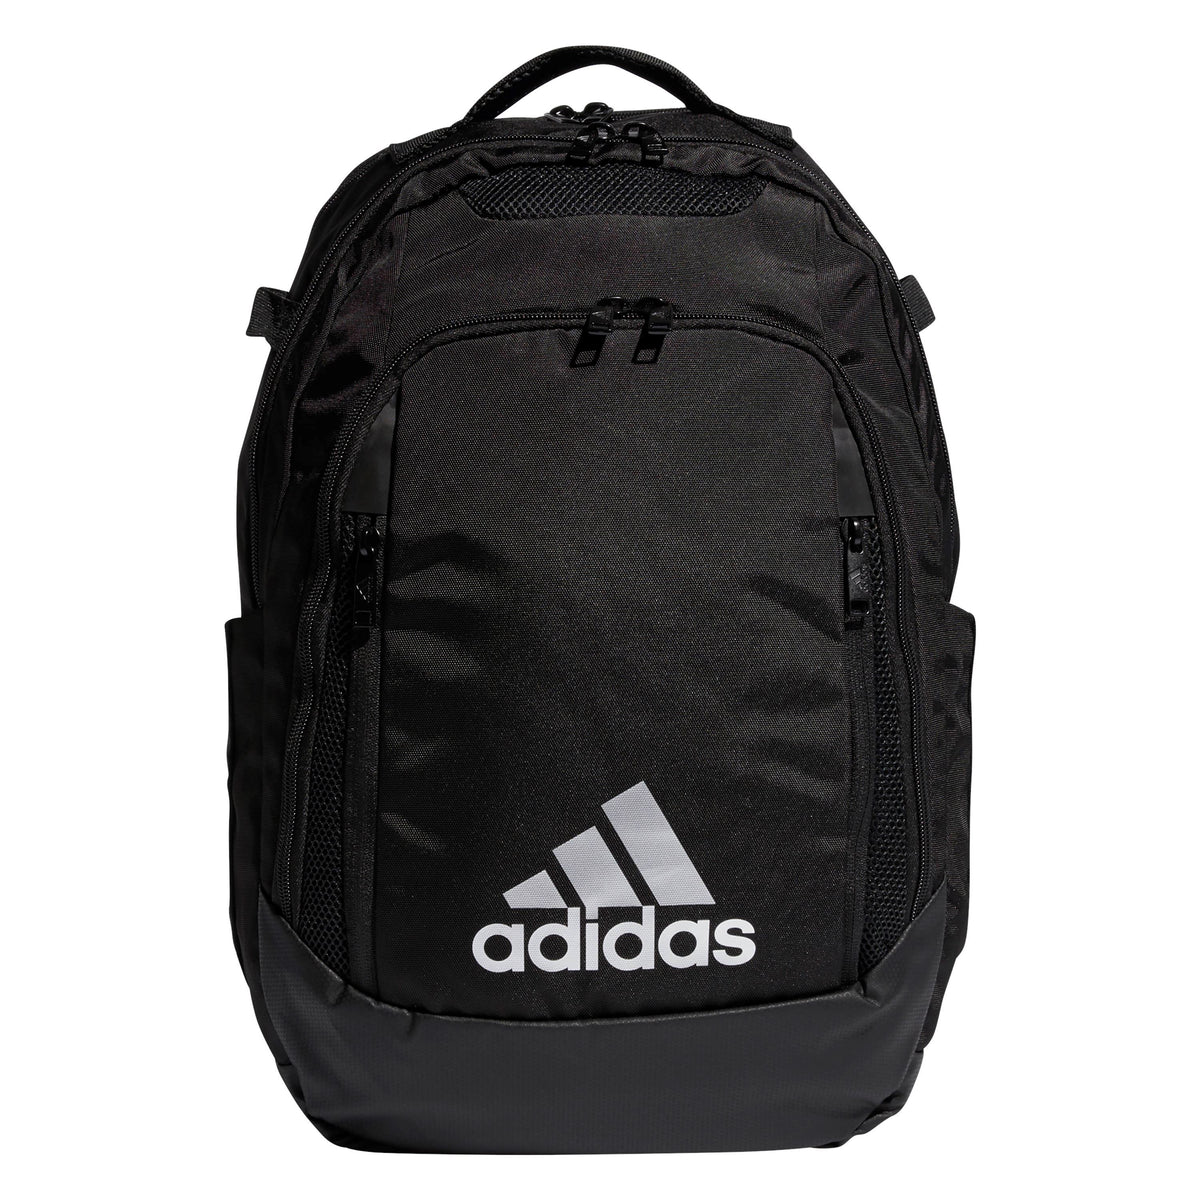 adidas 5-Star Team Backpack | 5146852 Bags Adidas Black 